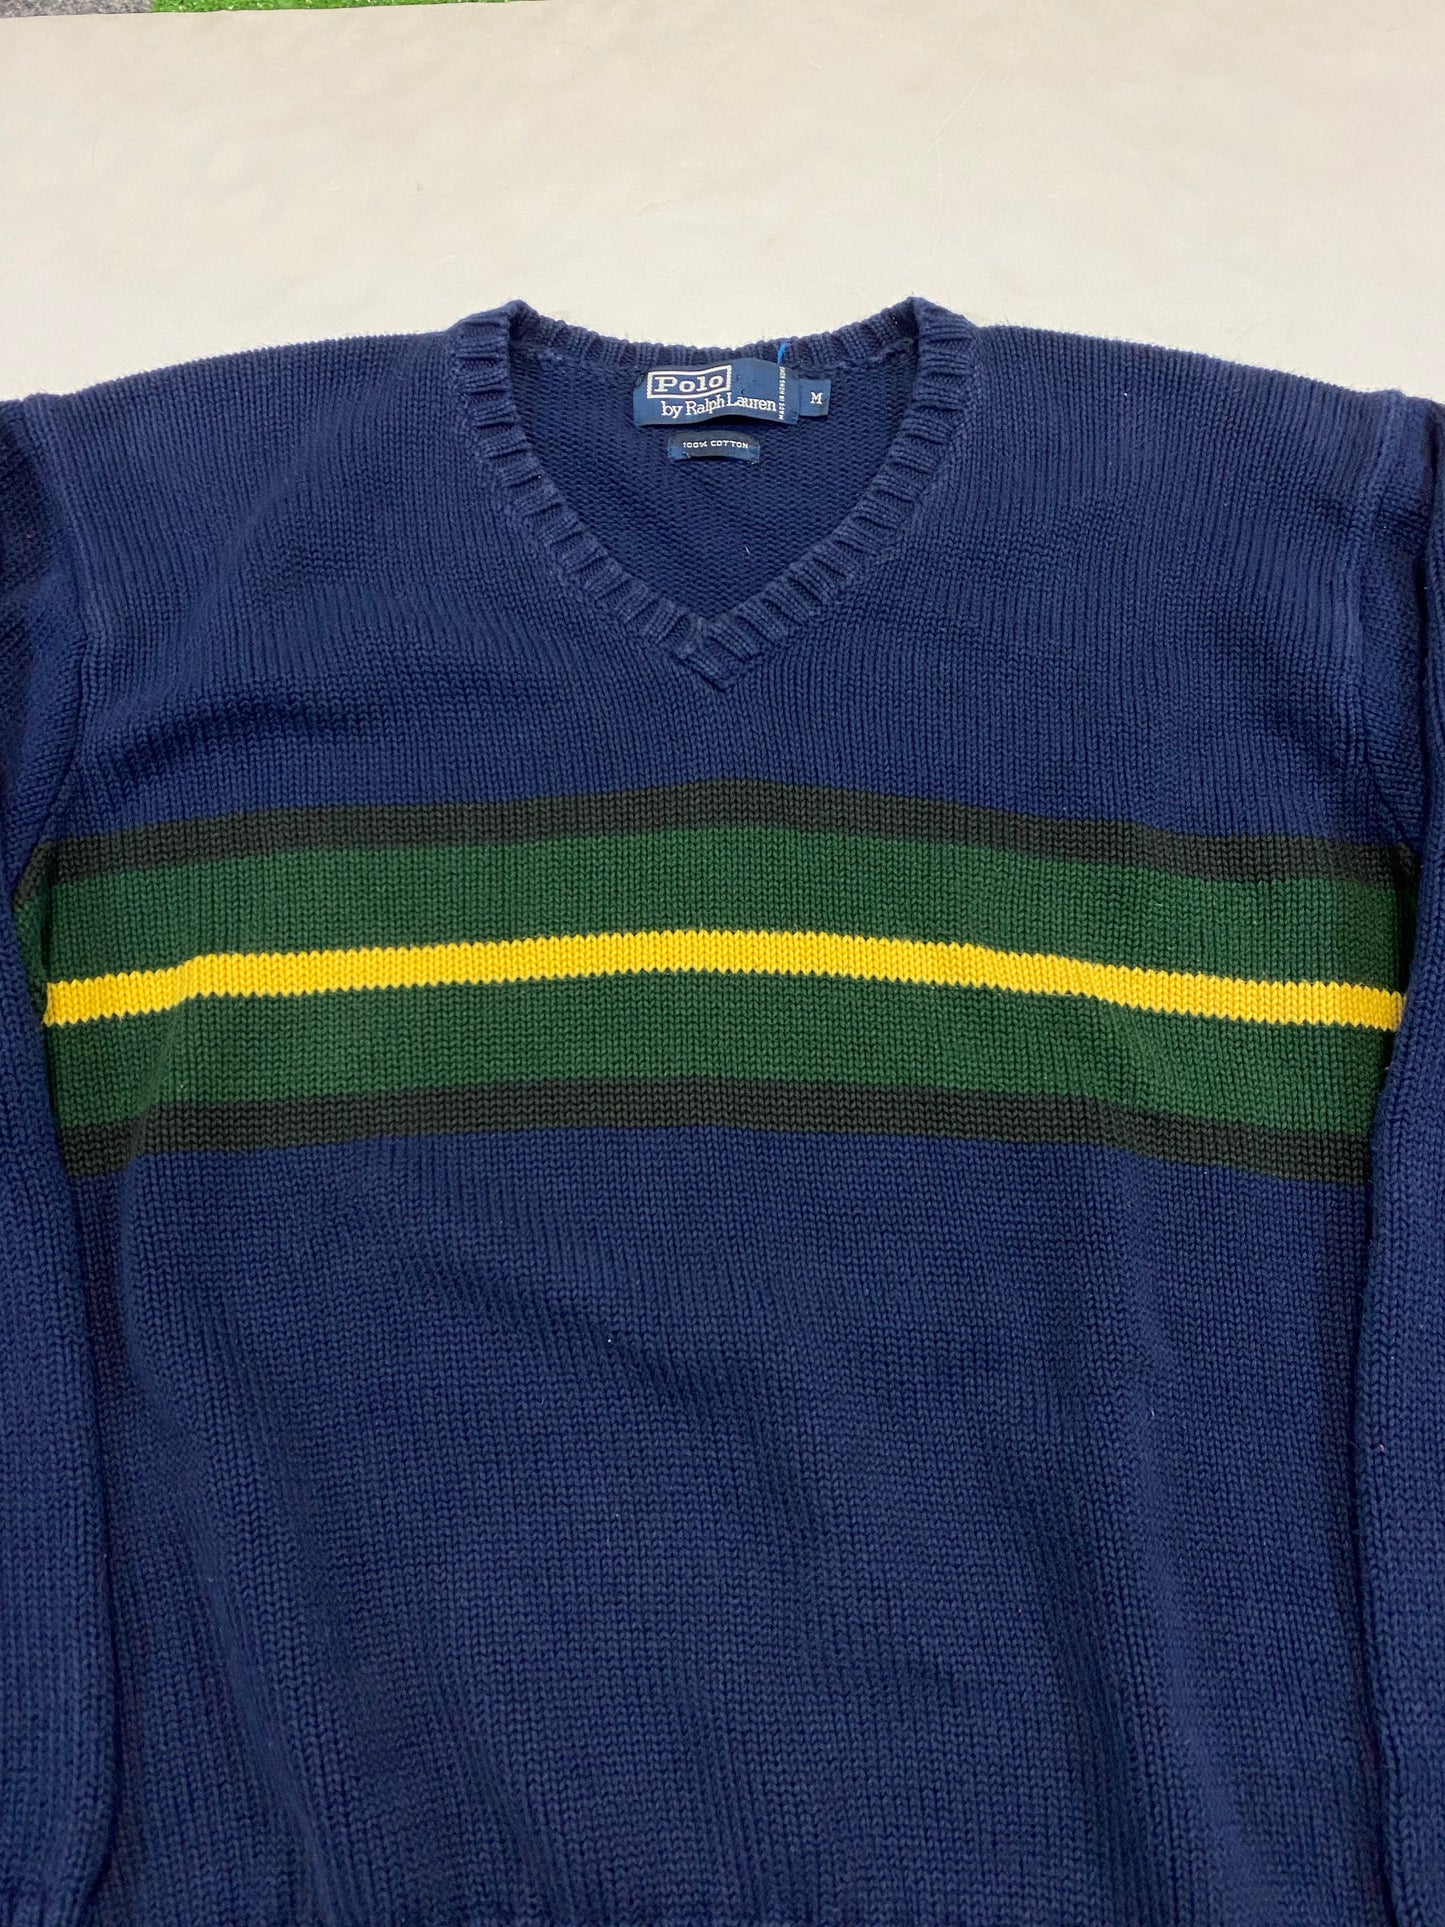 Polo Ralph Lauren 3 Tone Stripe Knit Sweater